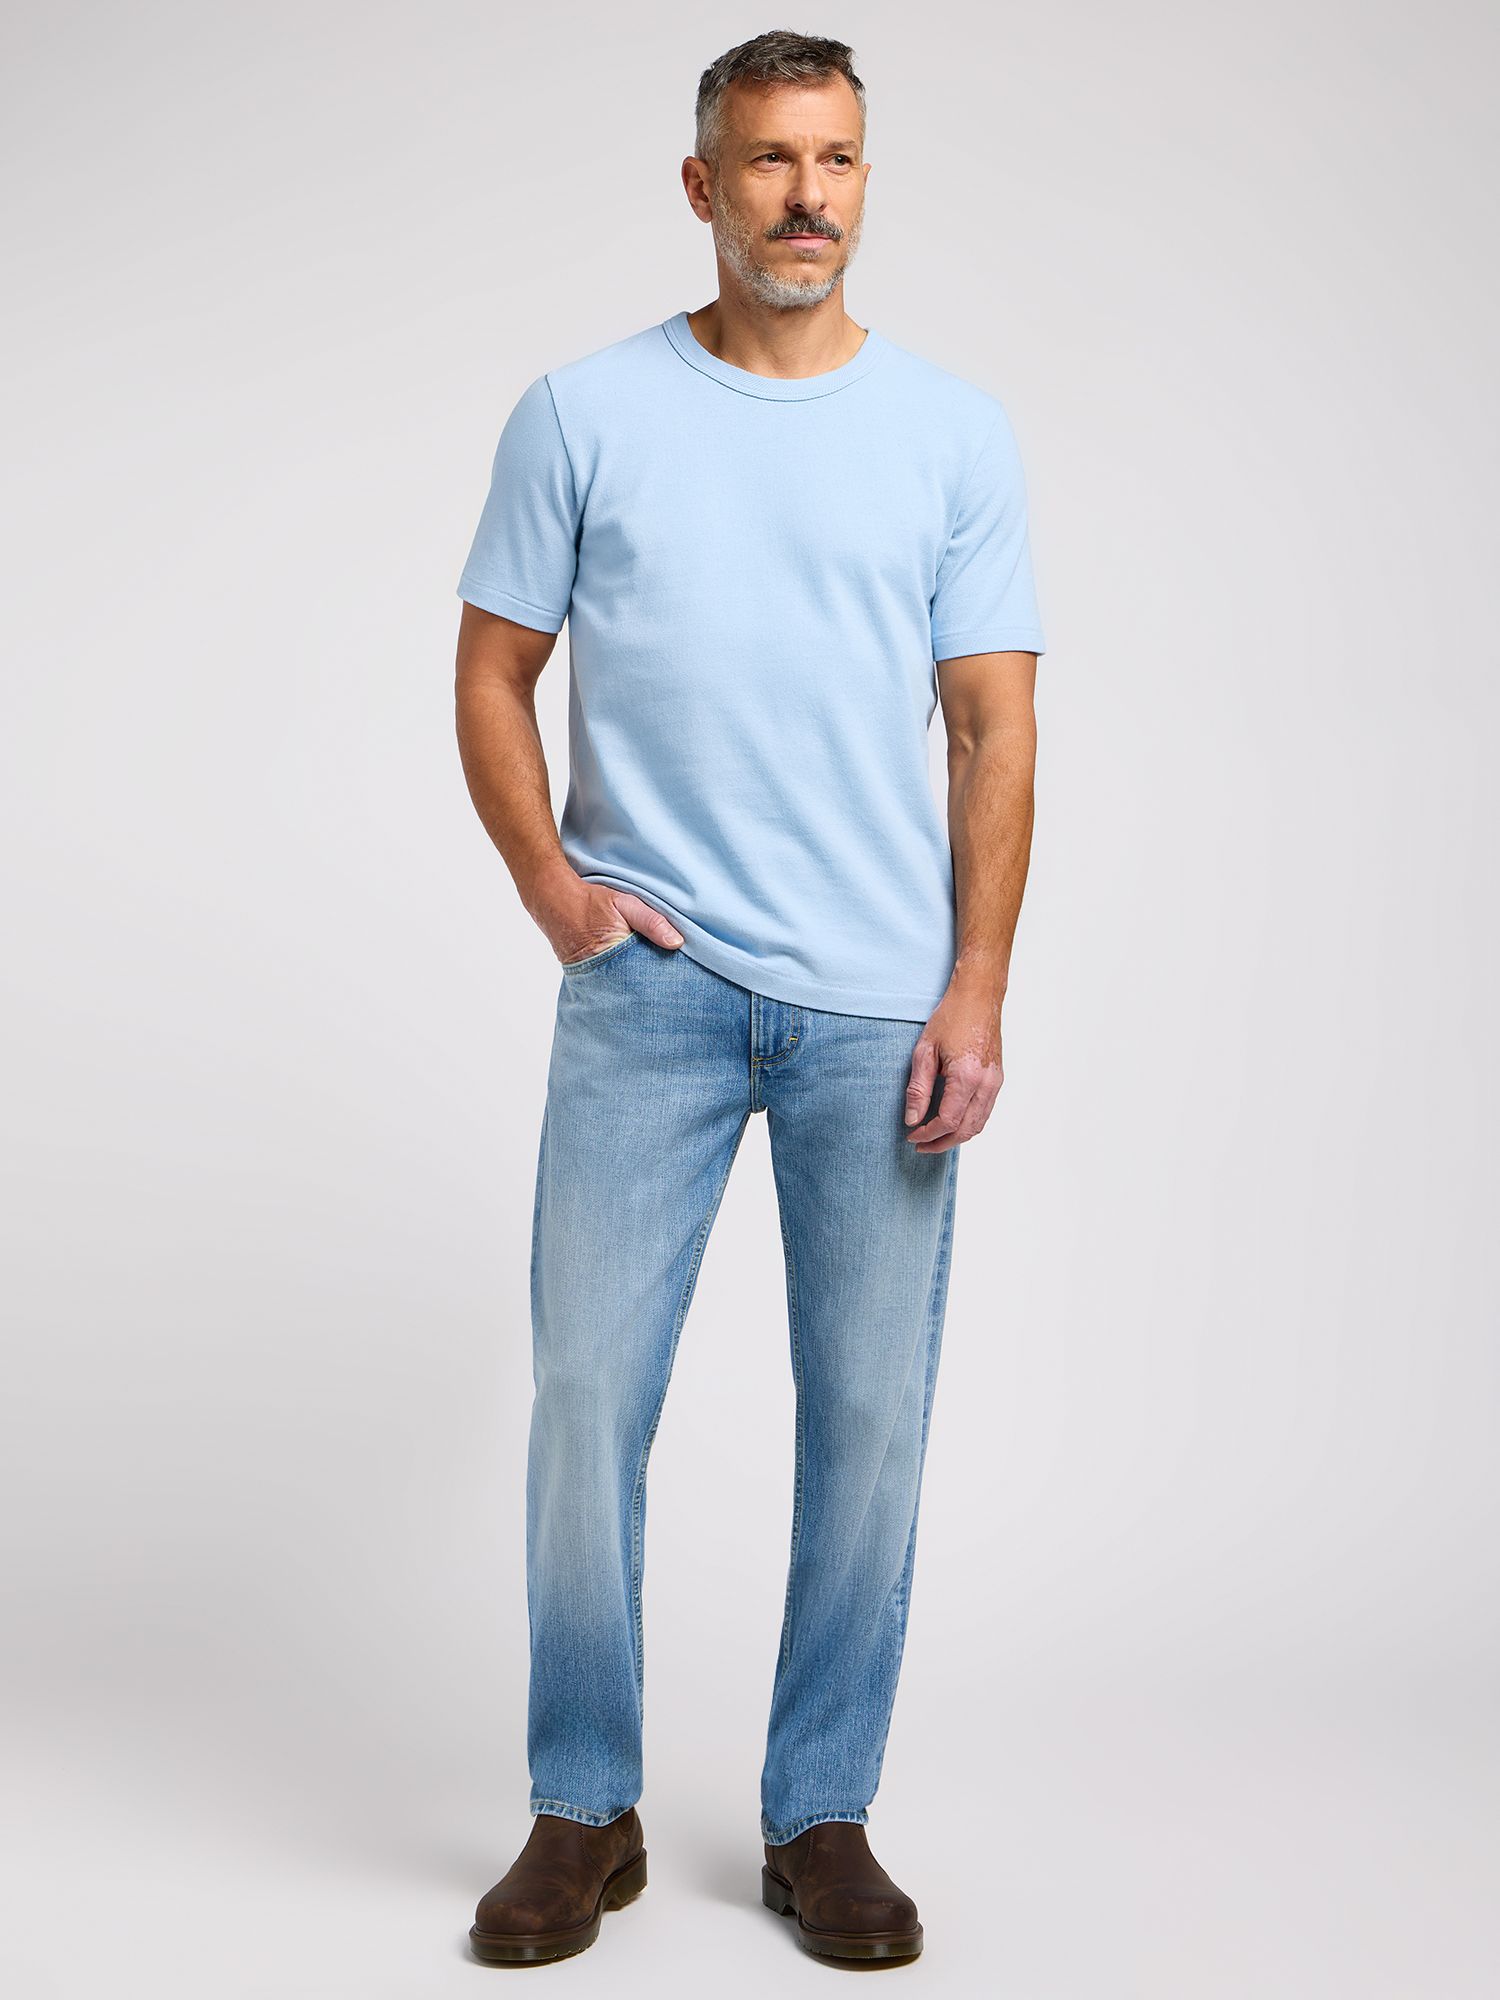 Lee 101 Cotton T-Shirt, Light Blue, S